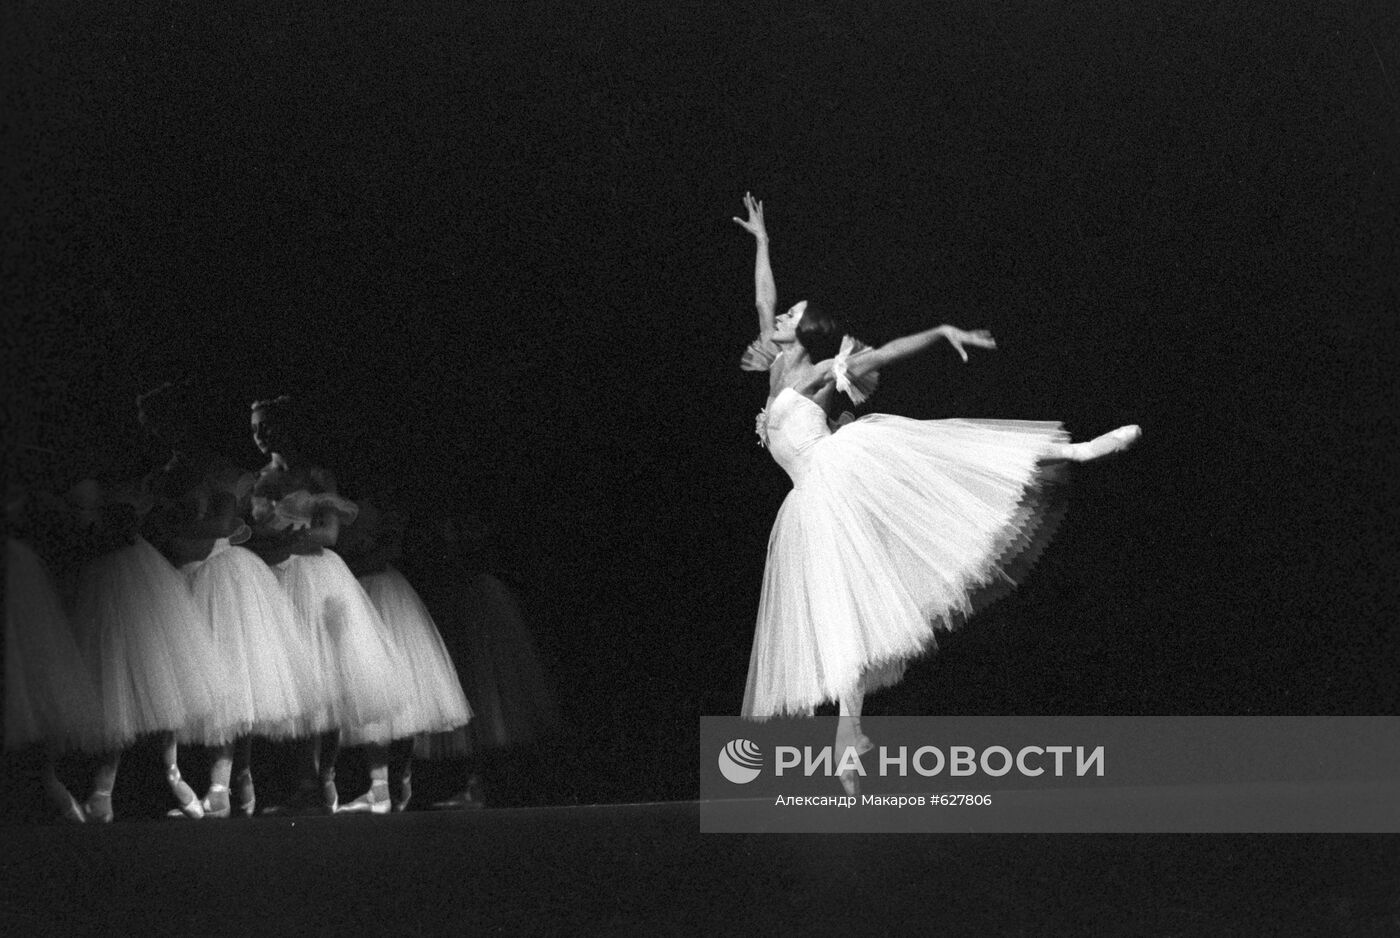 Сцена из балета "Жизель"